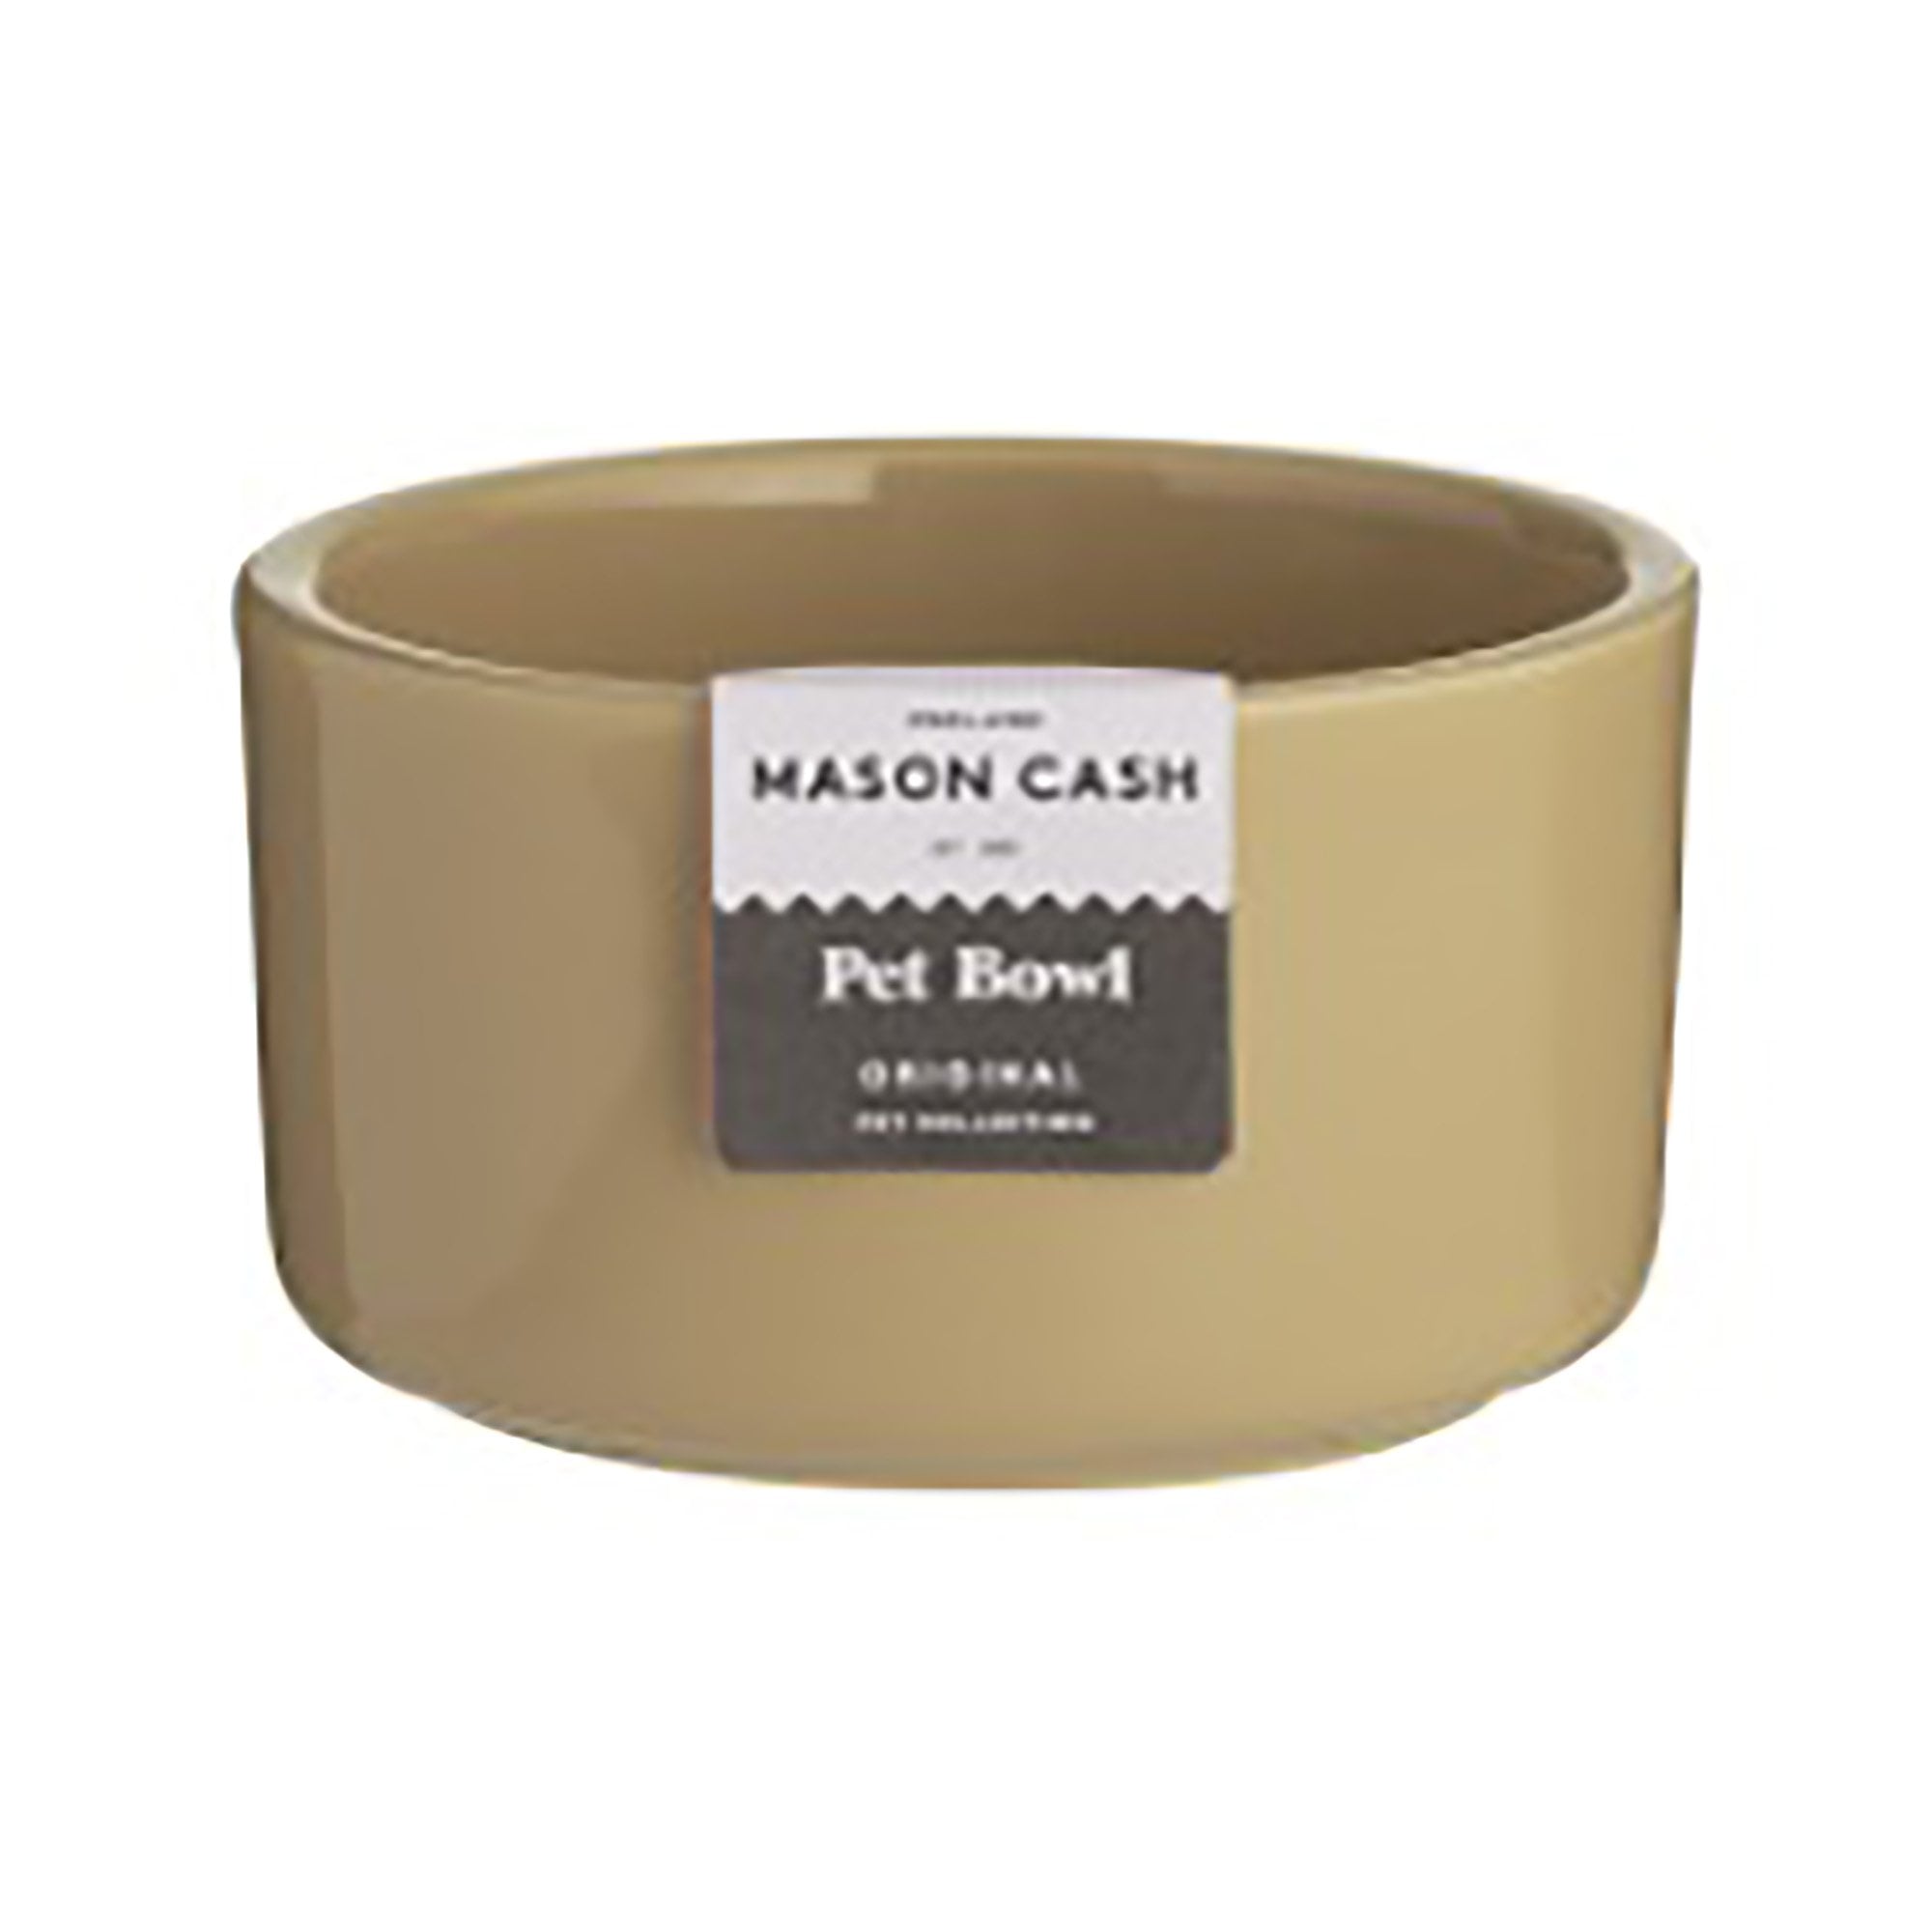 Mason Cash Ceramic Small Animal Pet Bowl 8cm RRP 4.50 CLEARANCE XL 3.49